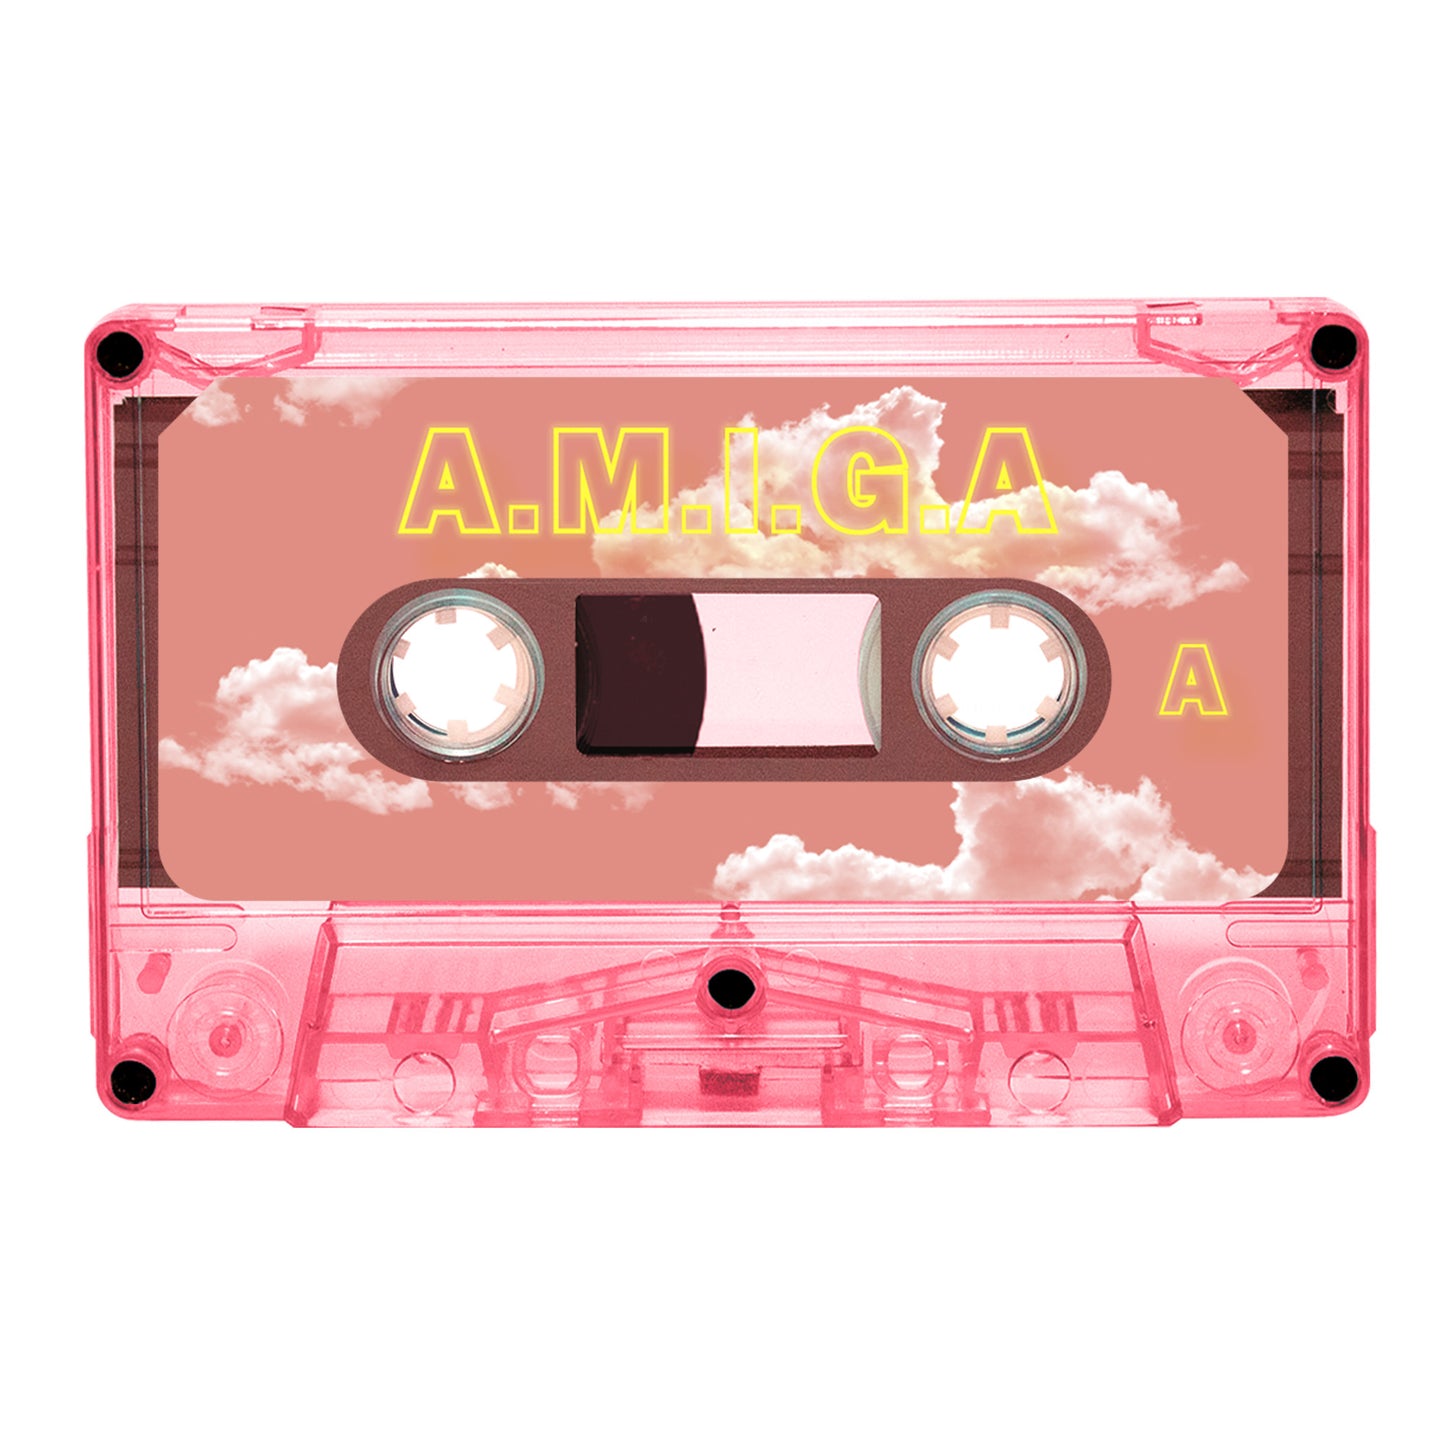 A.M.I.G.A - "a.m.i.g.a.uy" Limited Edition Cassette Tape